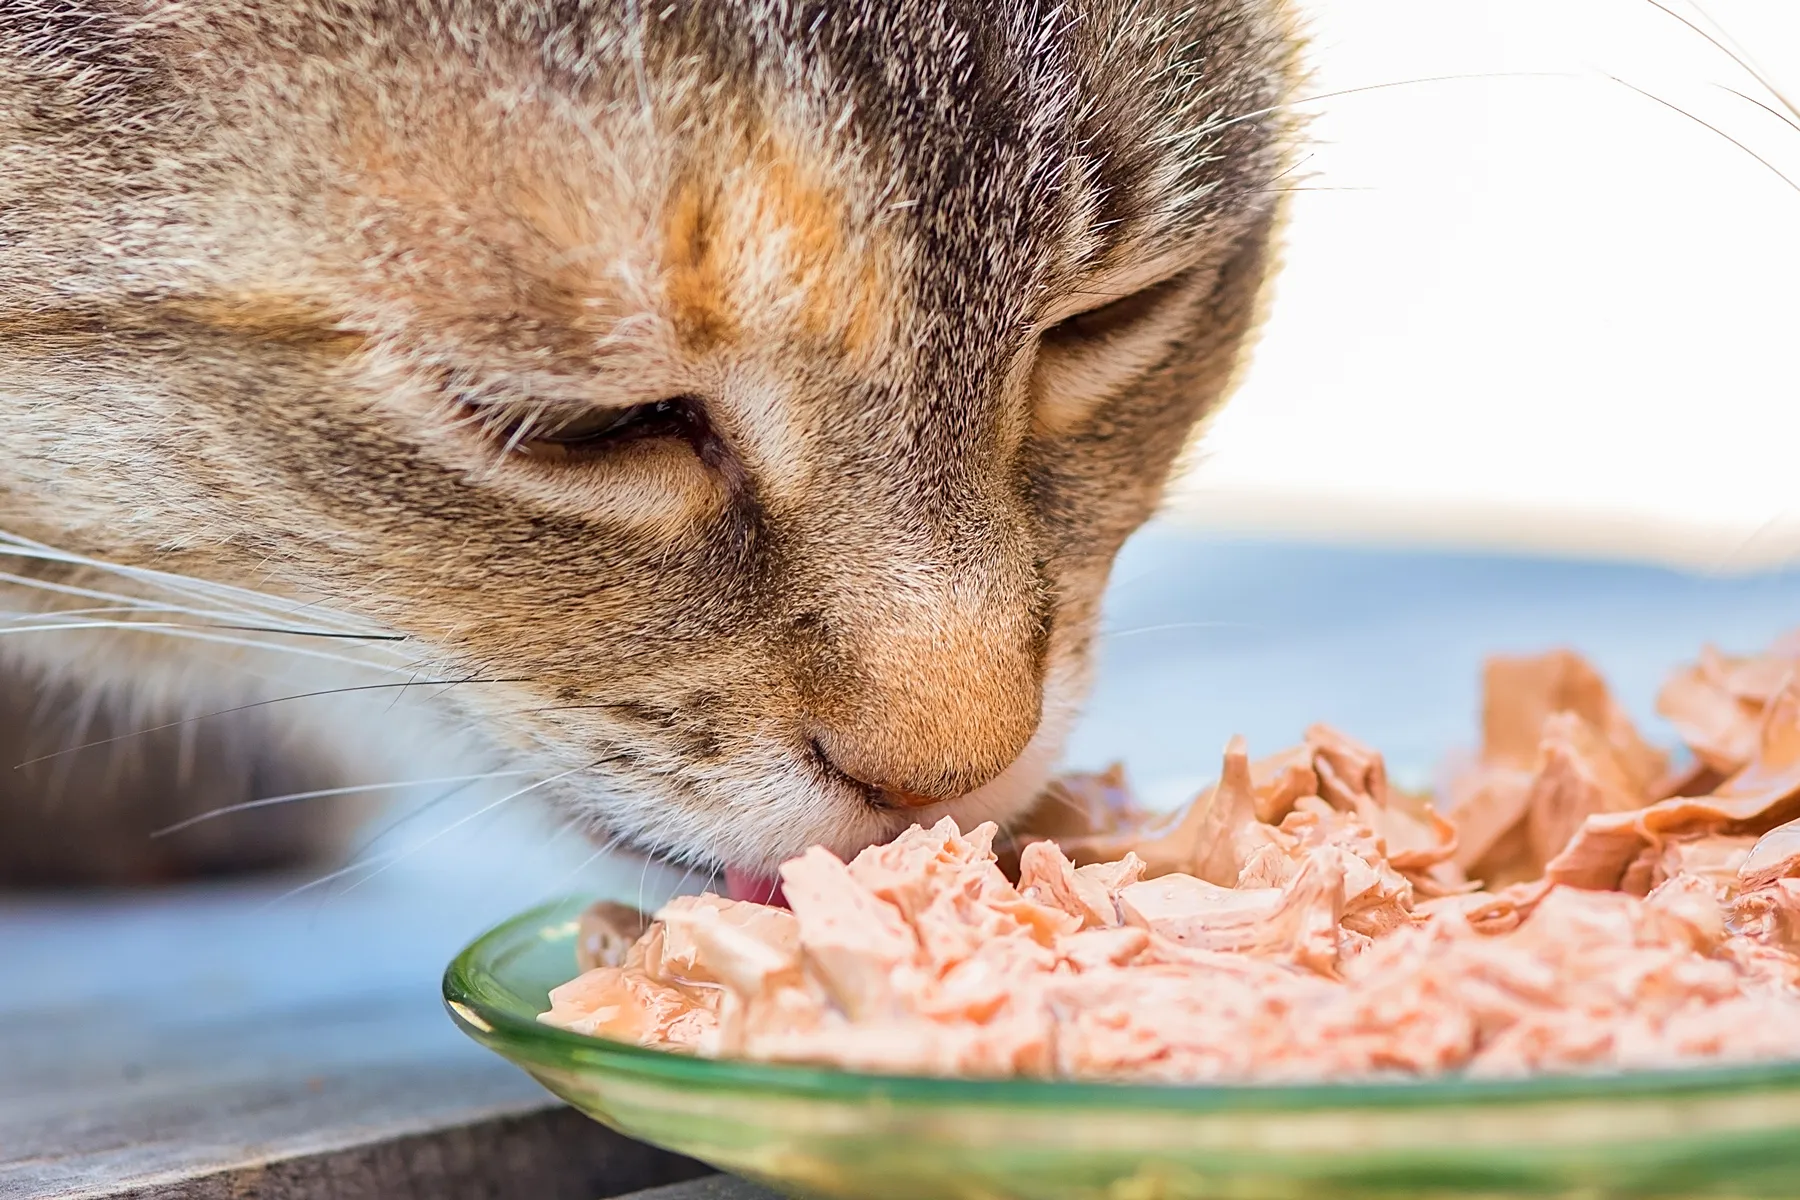 Image result for cat having food"